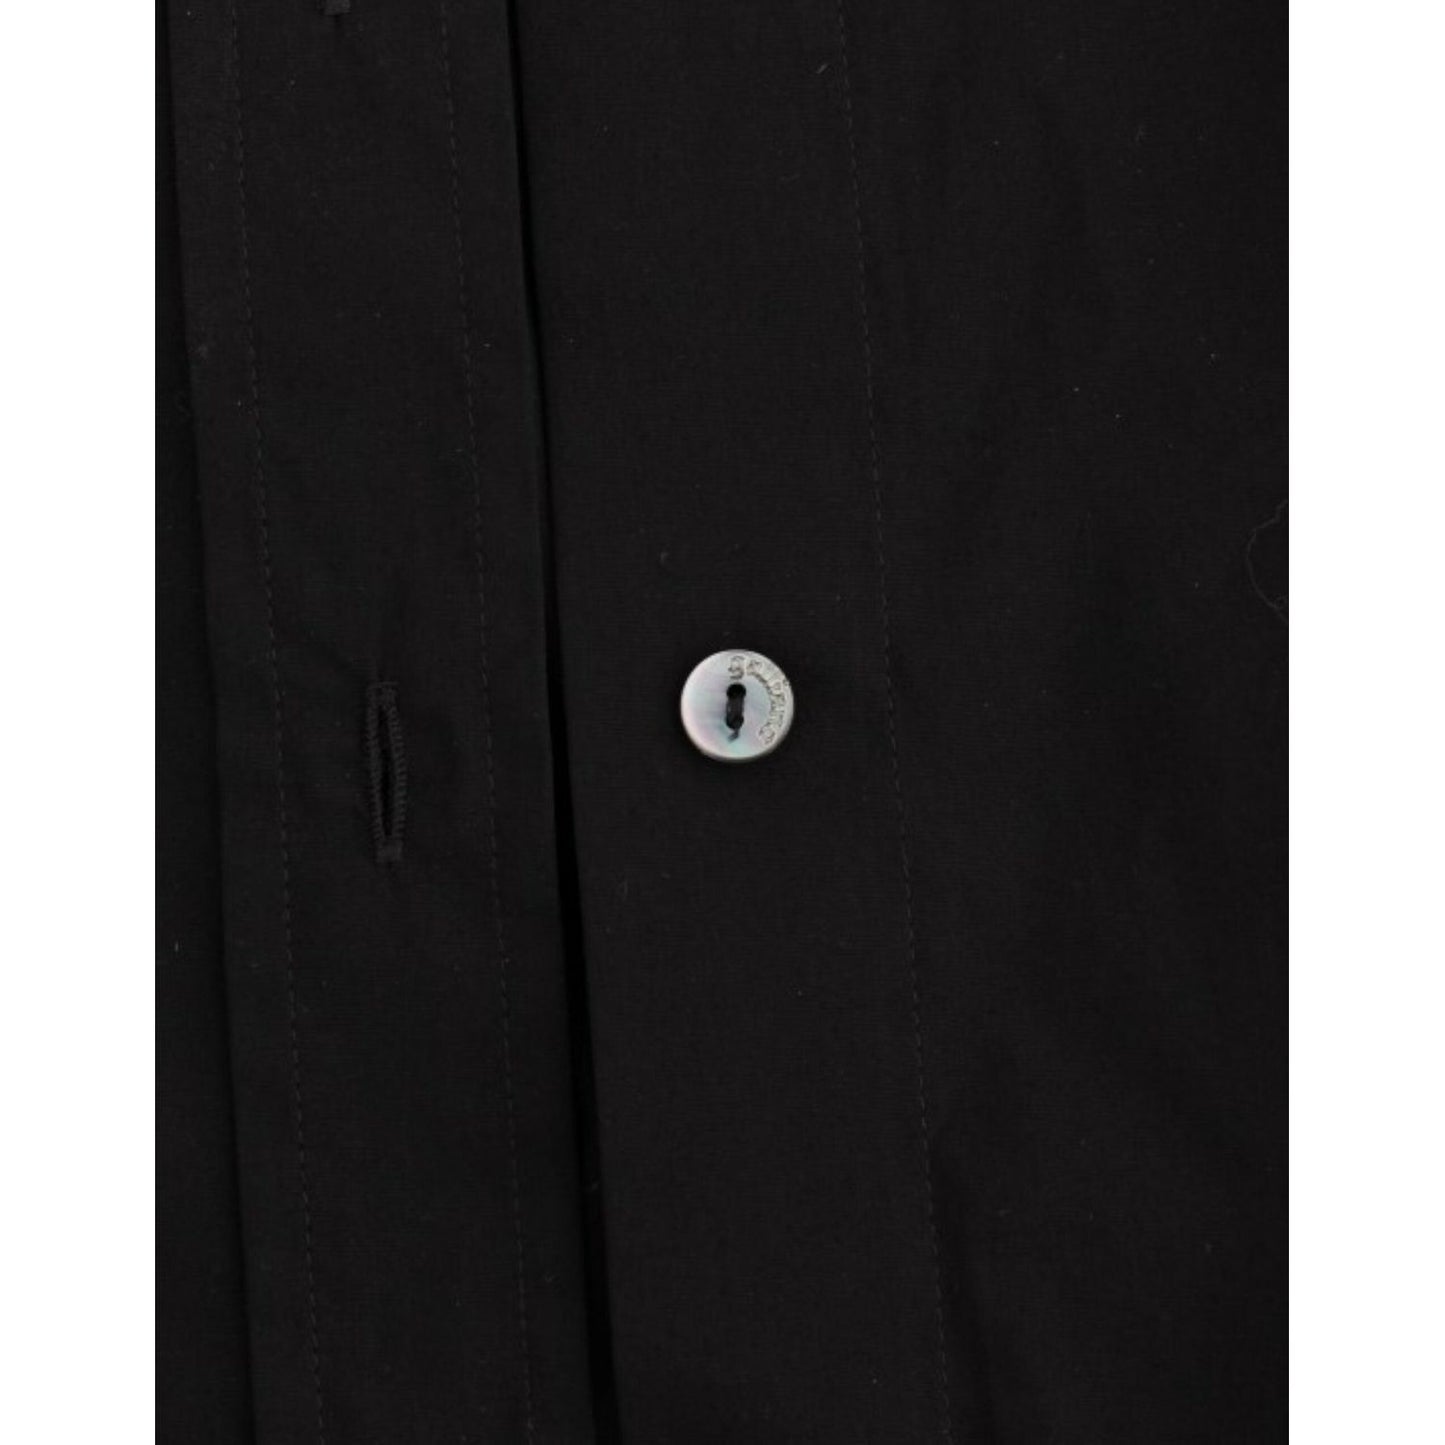 John Galliano Elegant Black Cotton Stretch Shortsleeve Blouse black-cotton-shirt-top 6699-black-cotton-shirt-top-5-scaled-e3237cd9-e9e.jpg